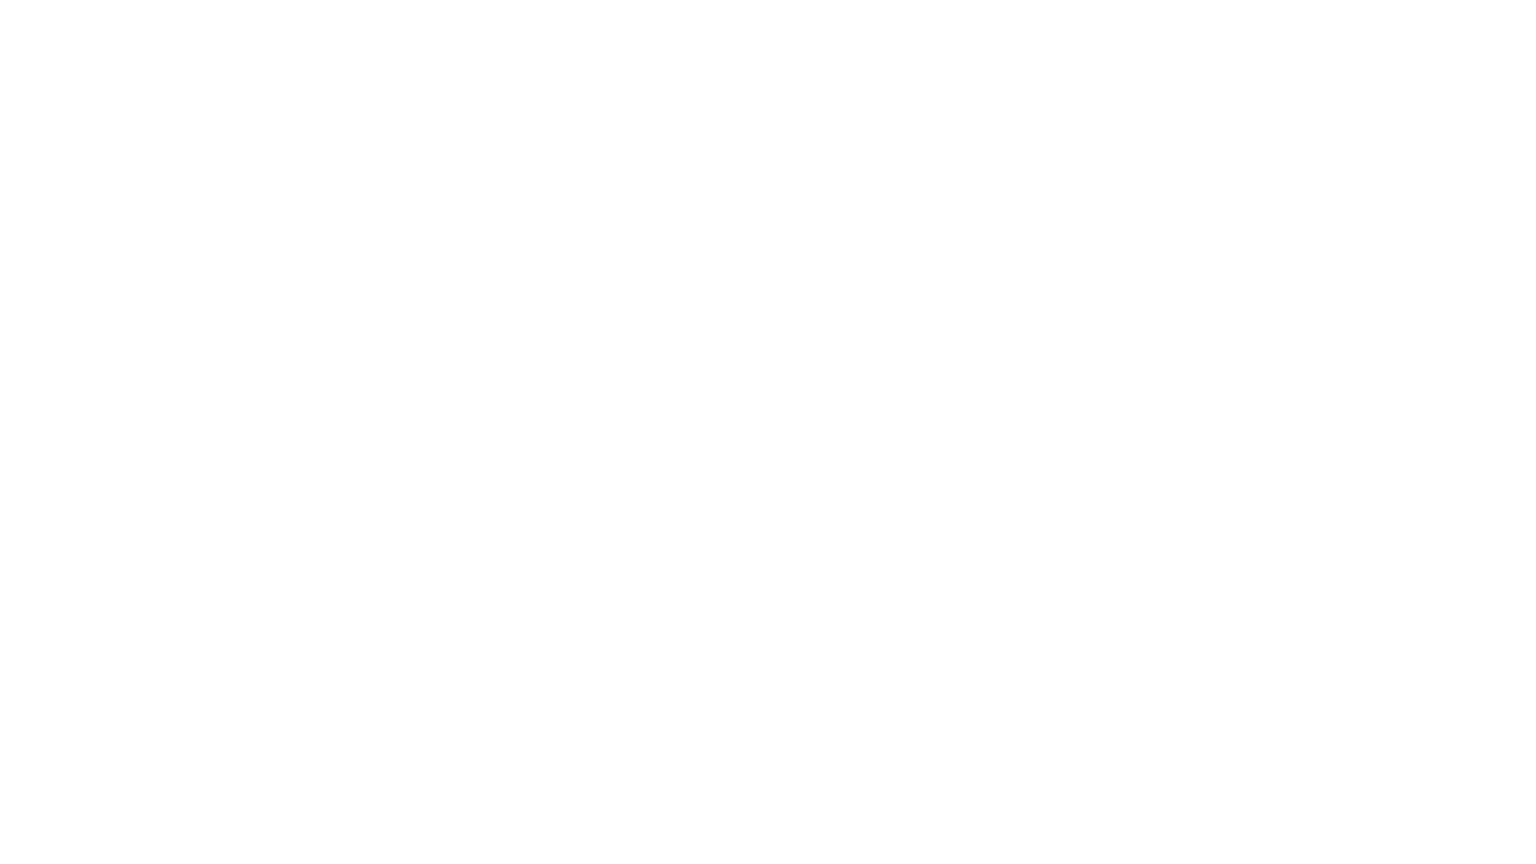 Interstellar Outdoor Cinema is Northwestern Ontario's mobile movie